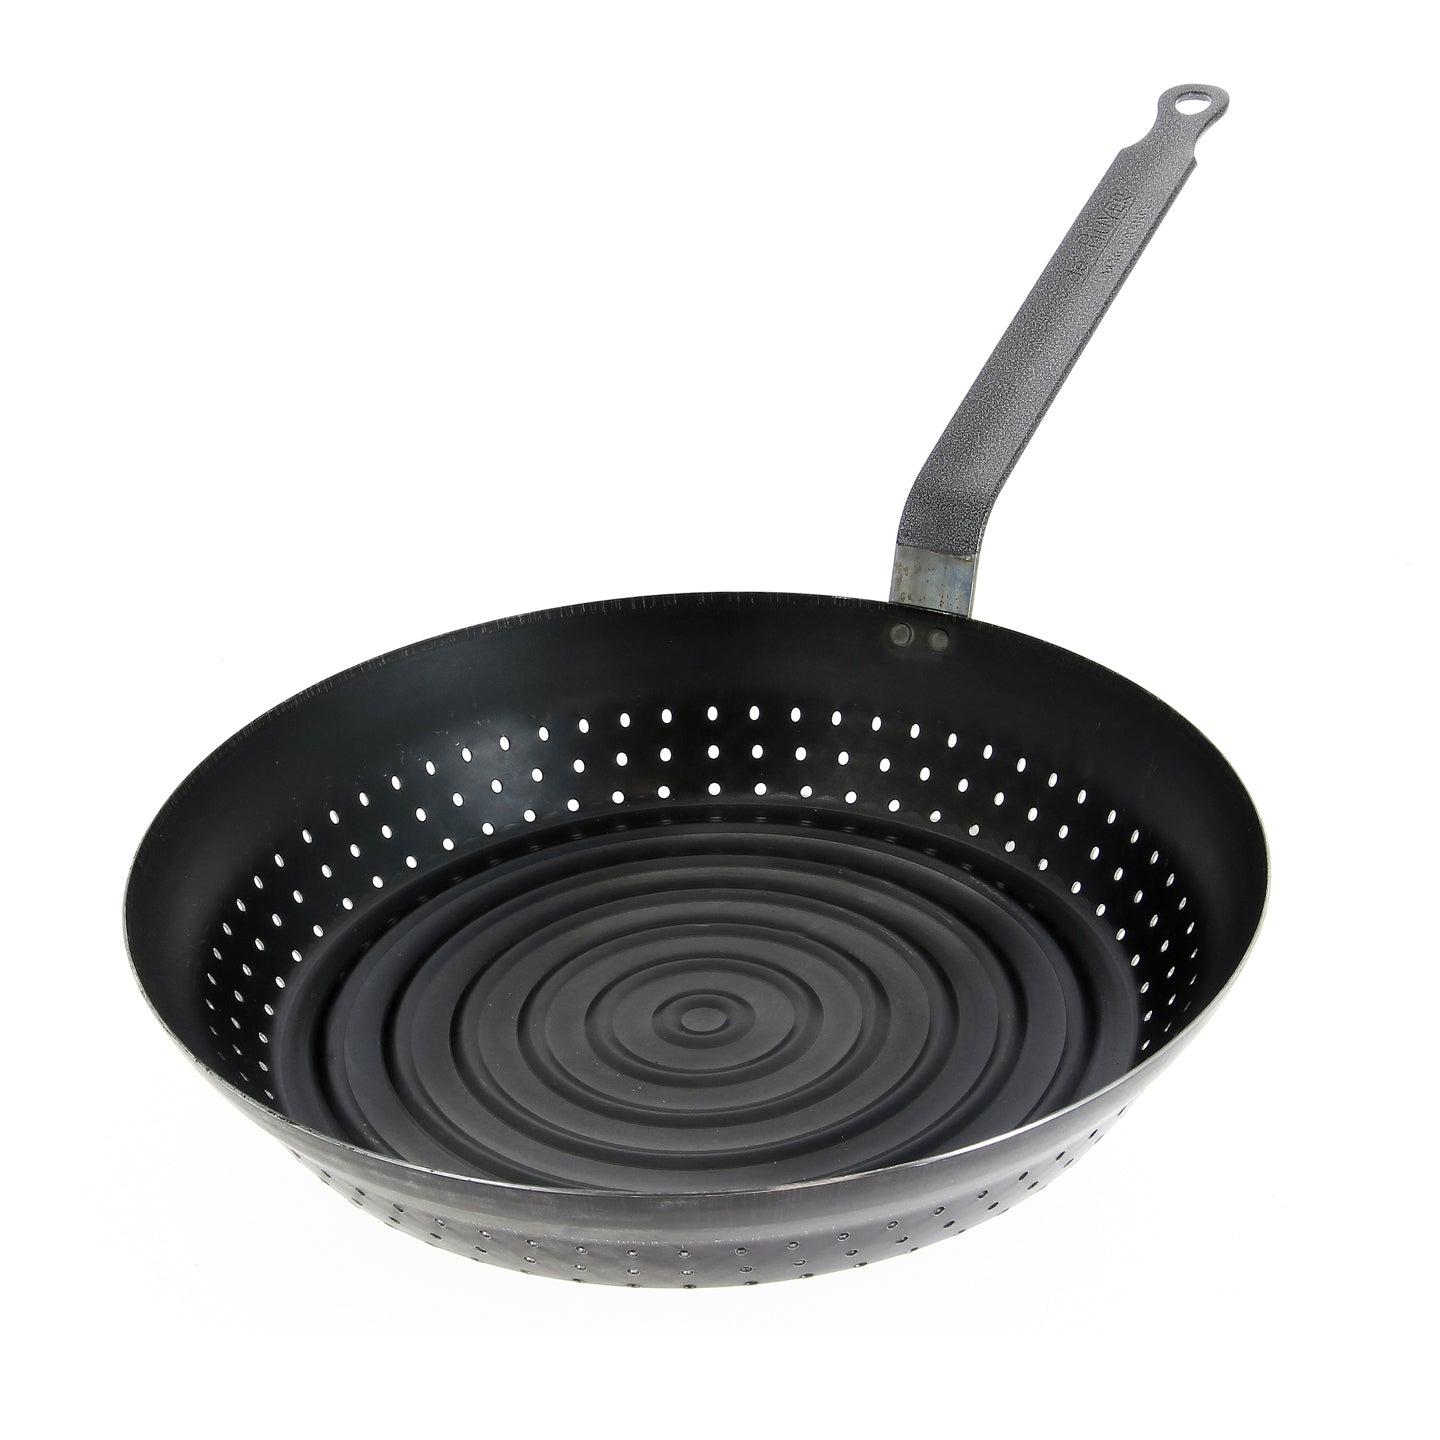 Chestnut pan with side ventilation, mild steel, , Chestnut pans - De Buyer